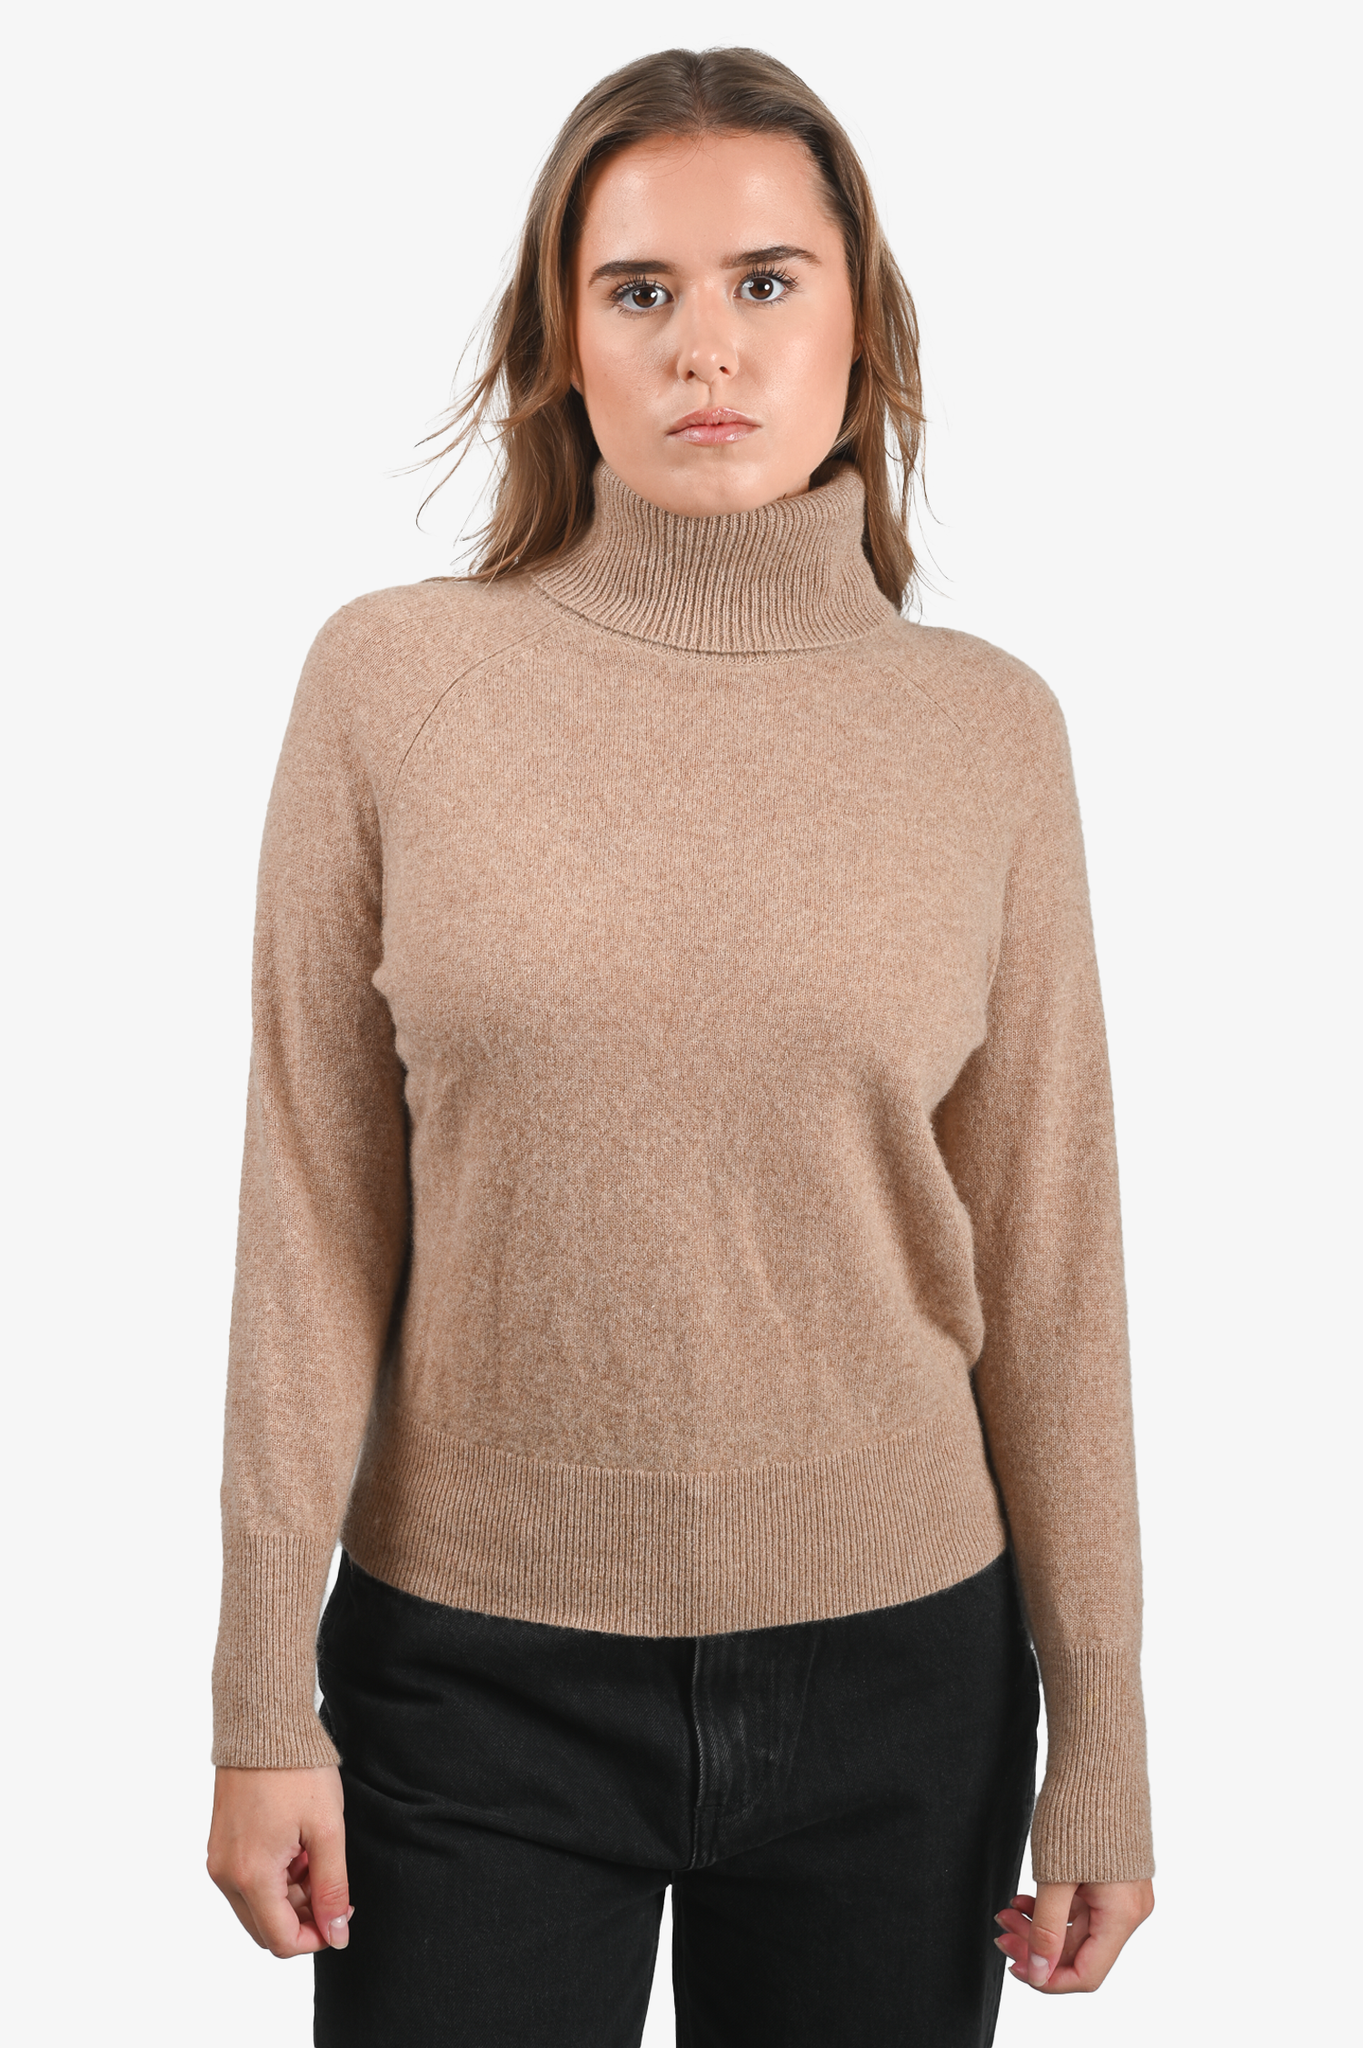 Louis Vuitton x Virgil Abloh Orange Teddy Sweatshirt sz XL – Mine & Yours